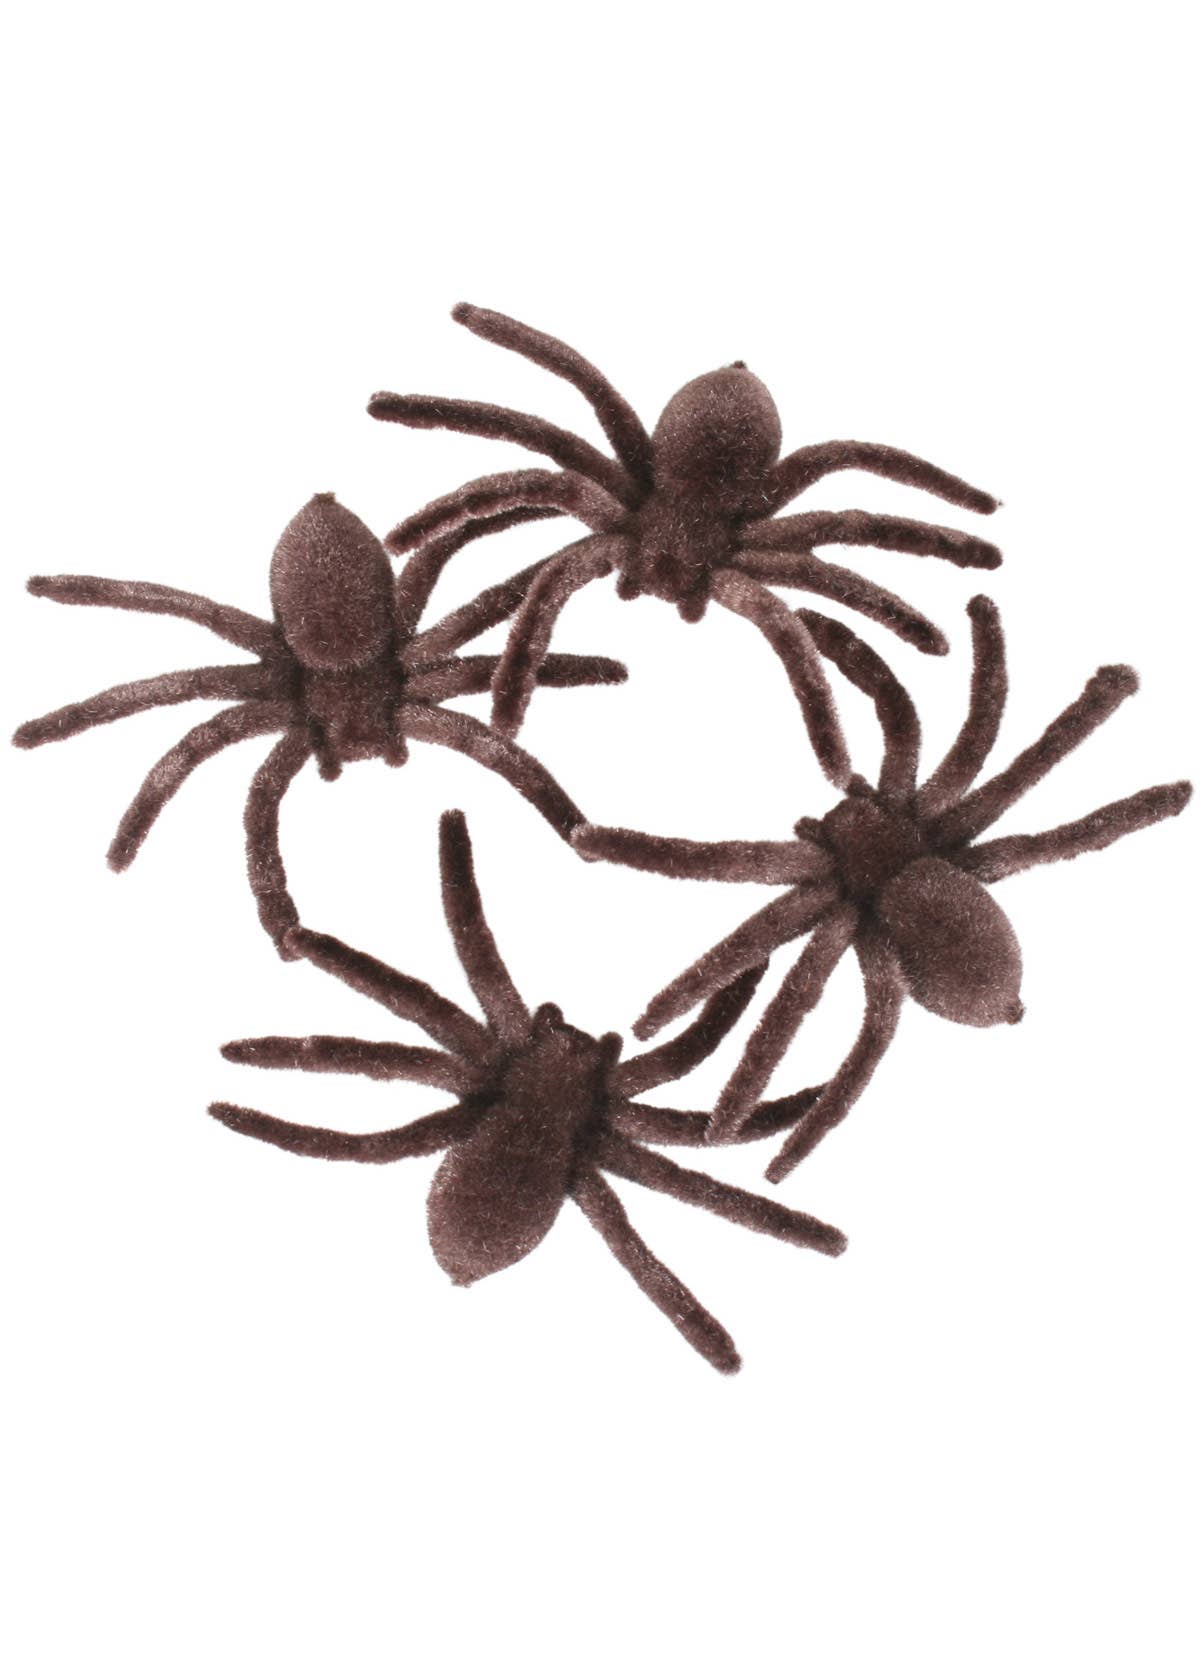 Flocked Brown Spider Halloween Decorations 4 Pack